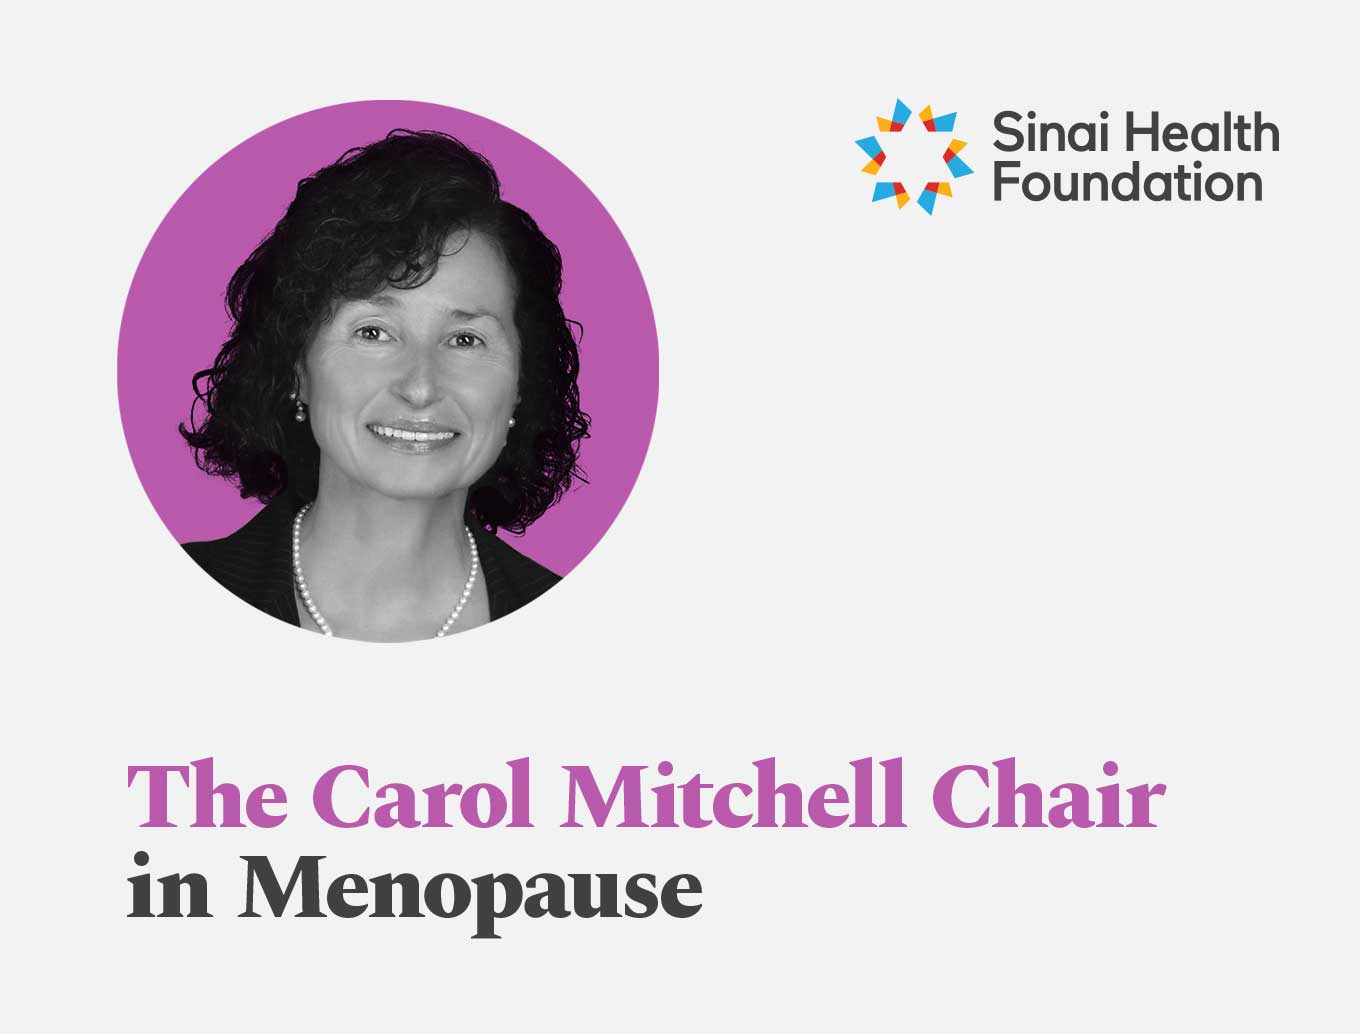 Carol Mitchell Chair Mature Women's Health